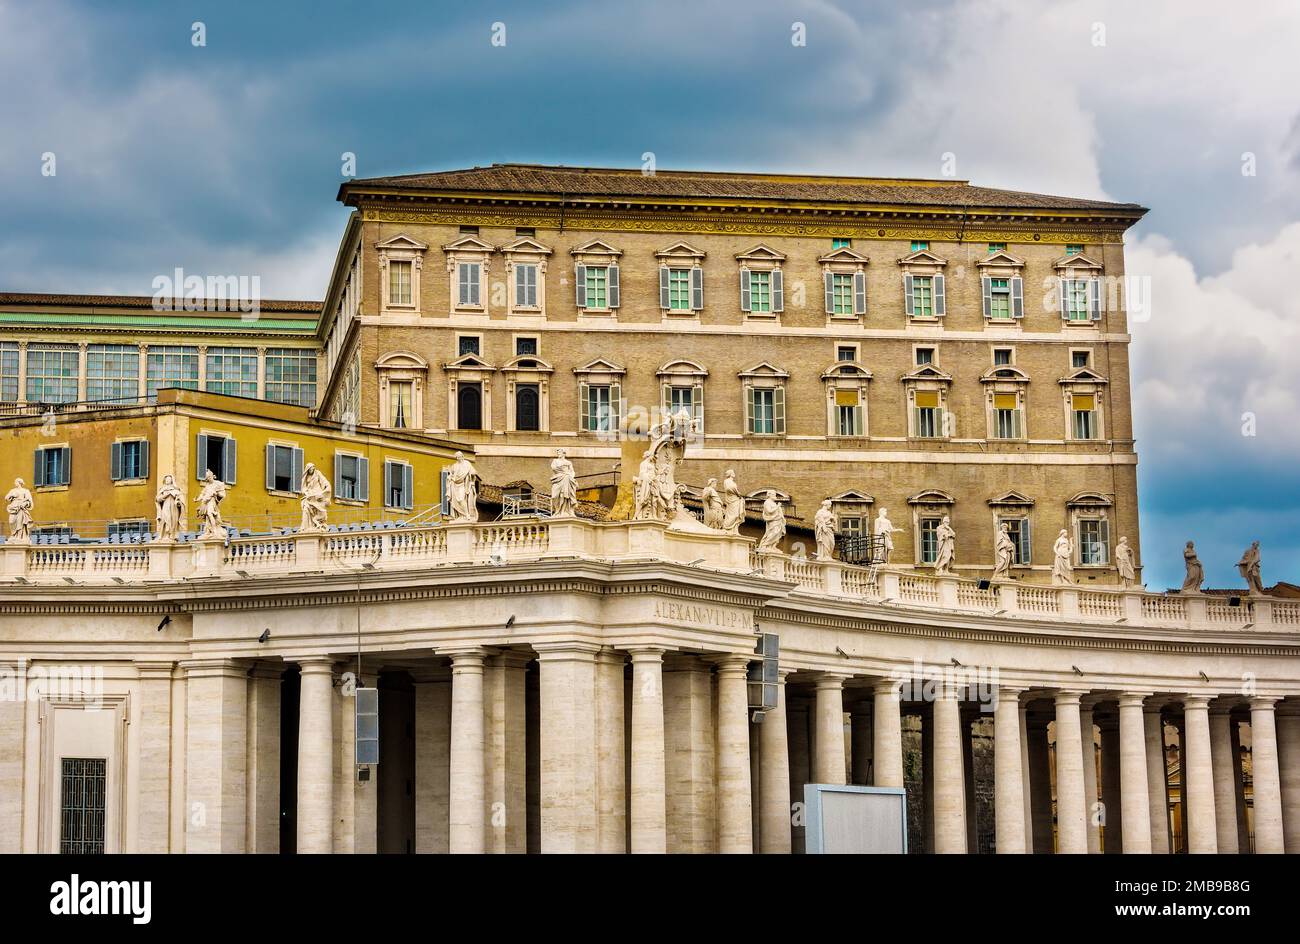 Vatikanstadt, Staat Vatikanstadt - 10. Juni 2016: Apostolischer Palast, offizielle Residenz des Papstes, auch bekannt als Papstpalast. Stockfoto